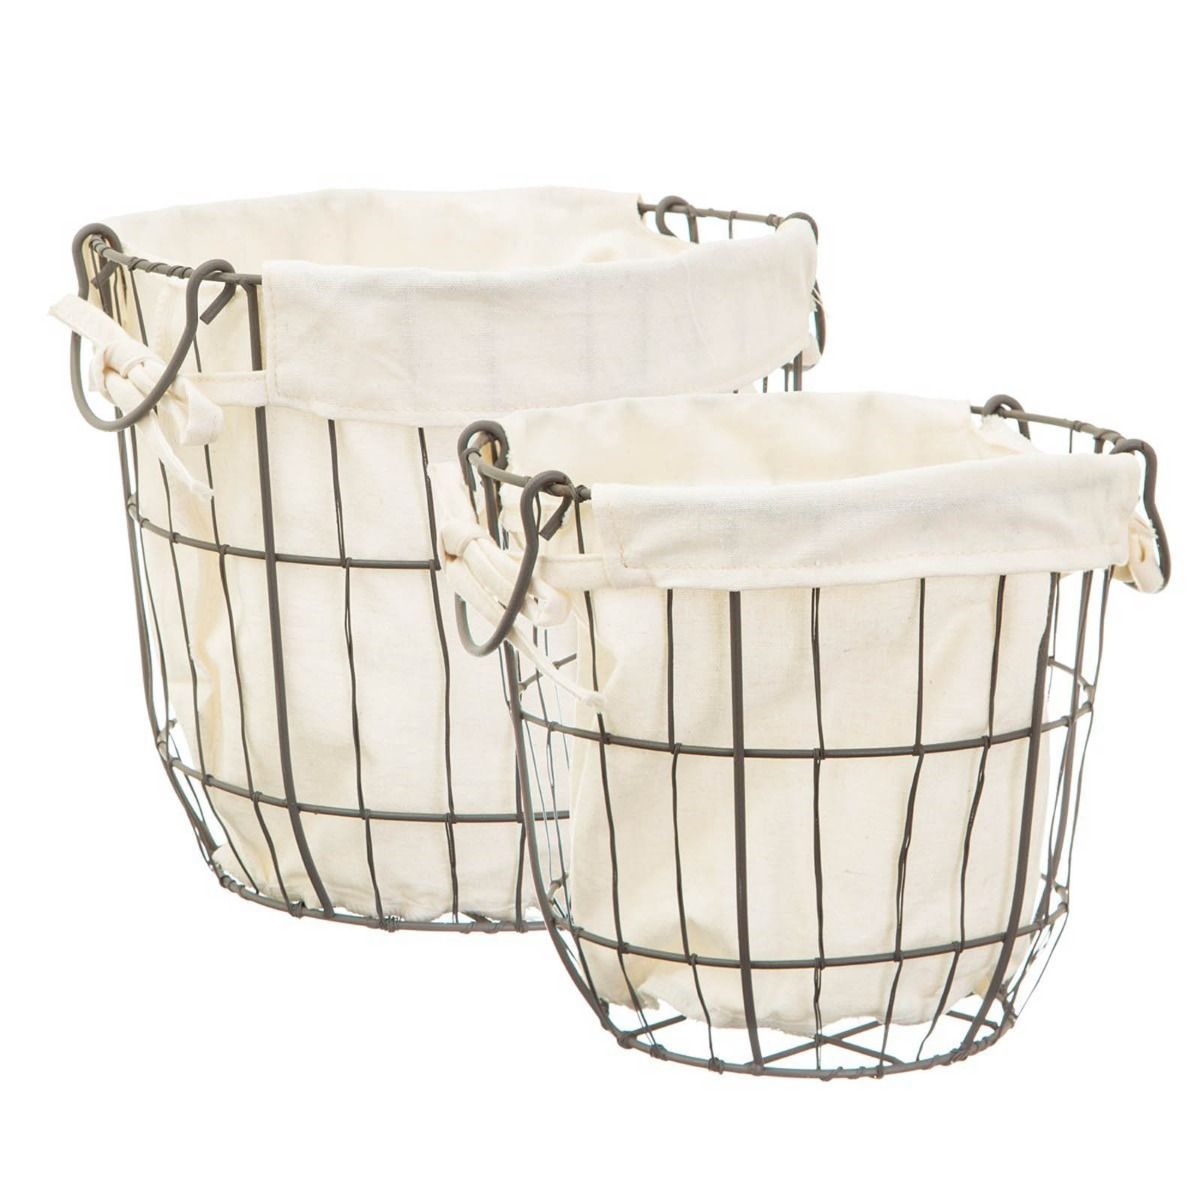 Sass & Belle Round Wire Storage Baskets With Lining, 2 Pack - Black